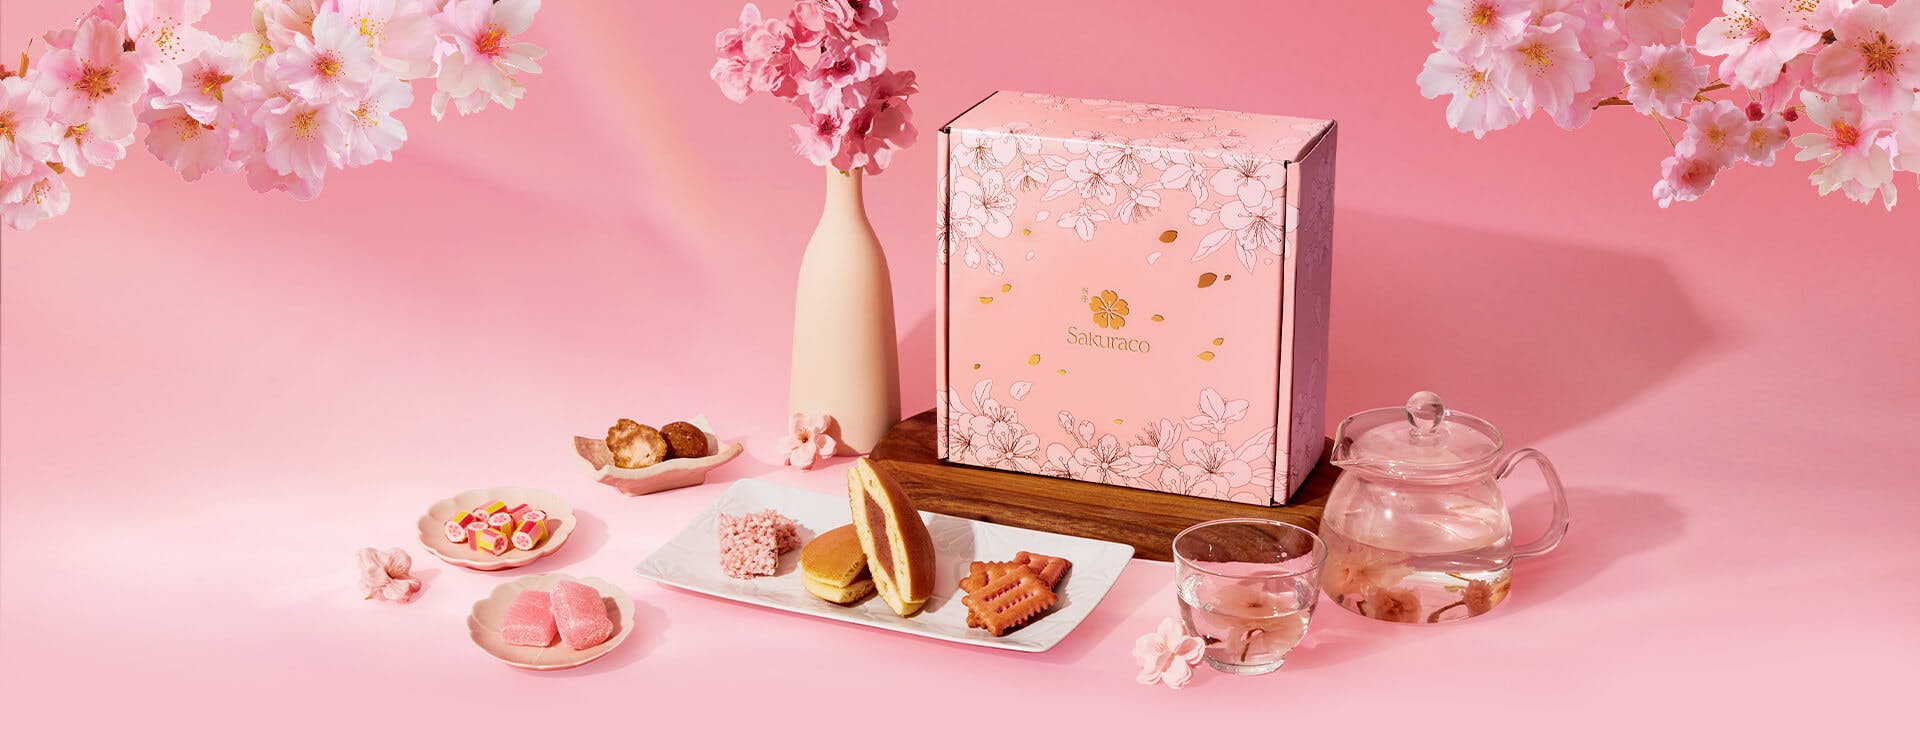 Sakuraco's March Box: Beauty of Sakura